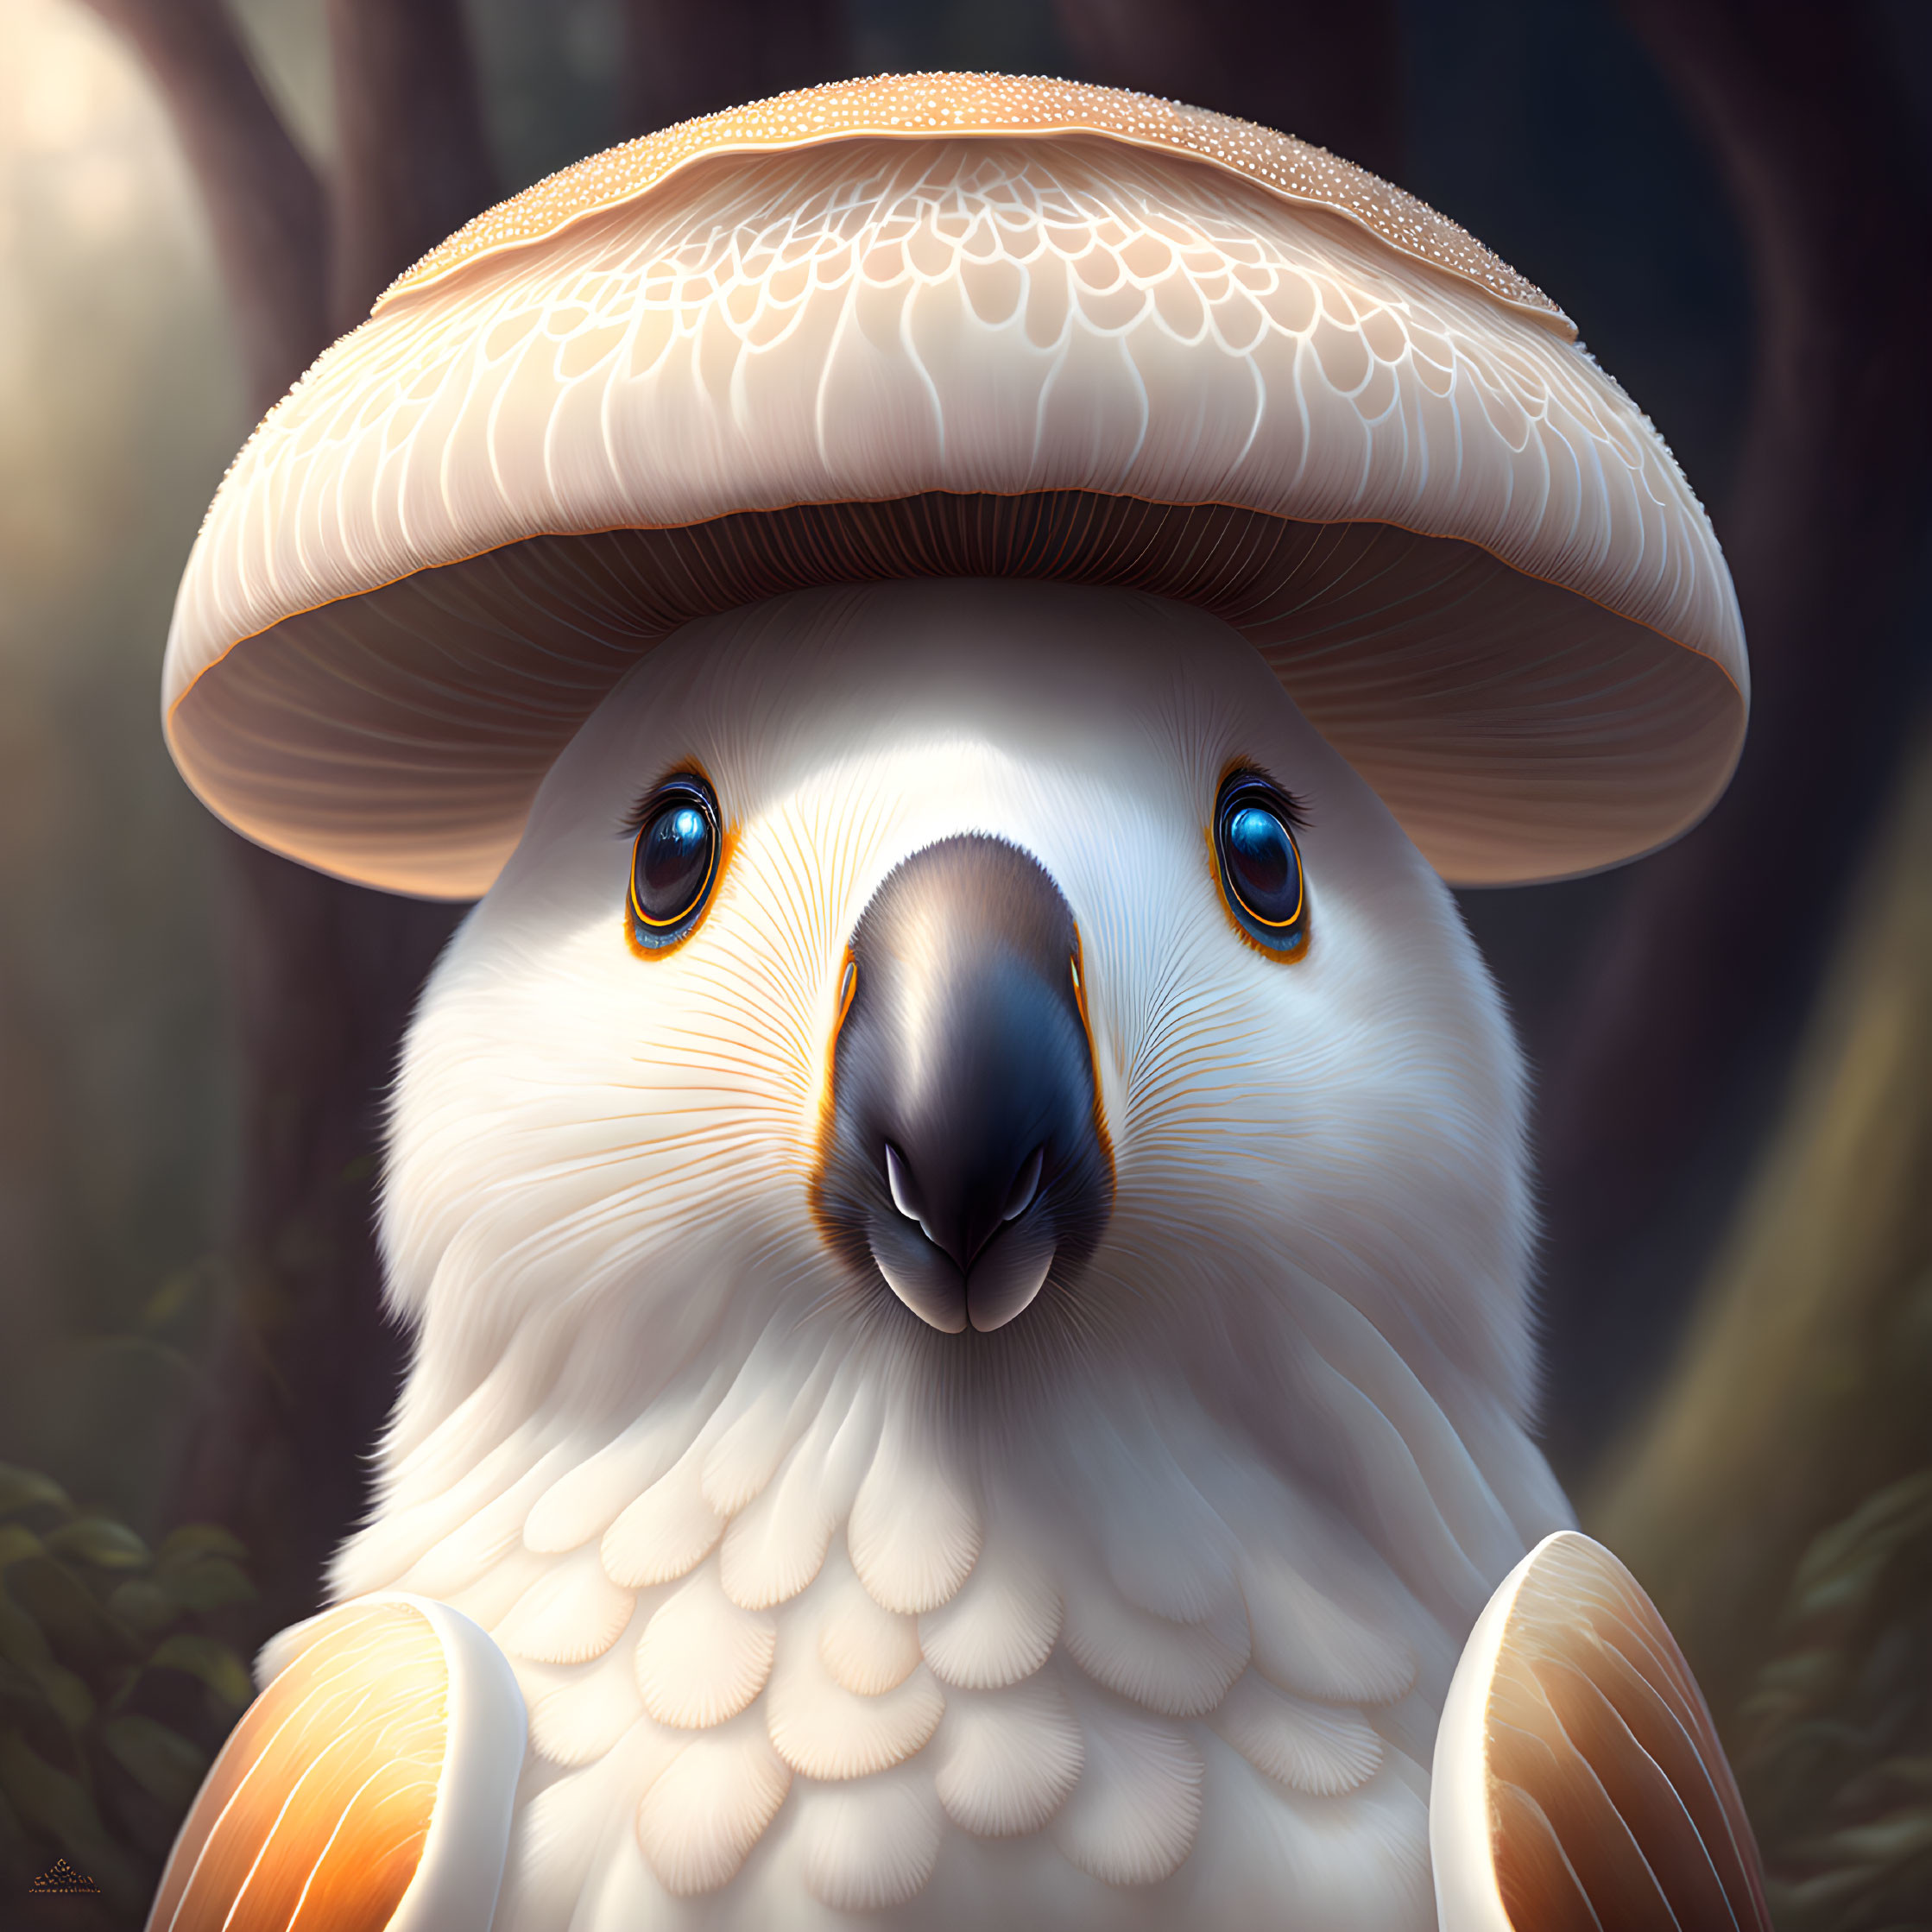 Bird with Mushroom Cap